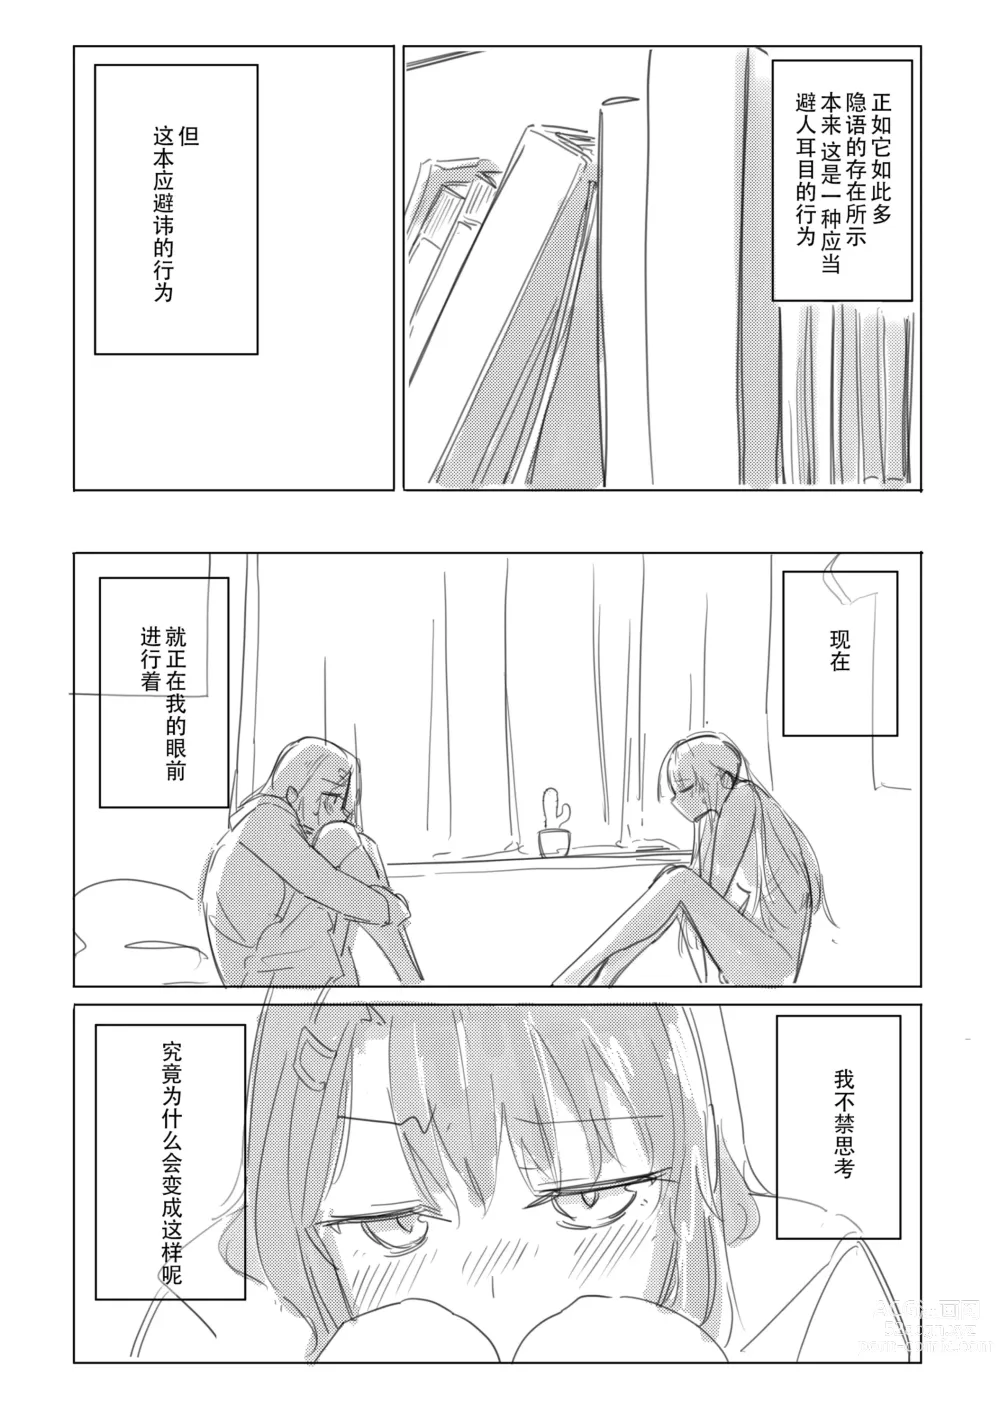 Page 3 of doujinshi Jii no Ballad